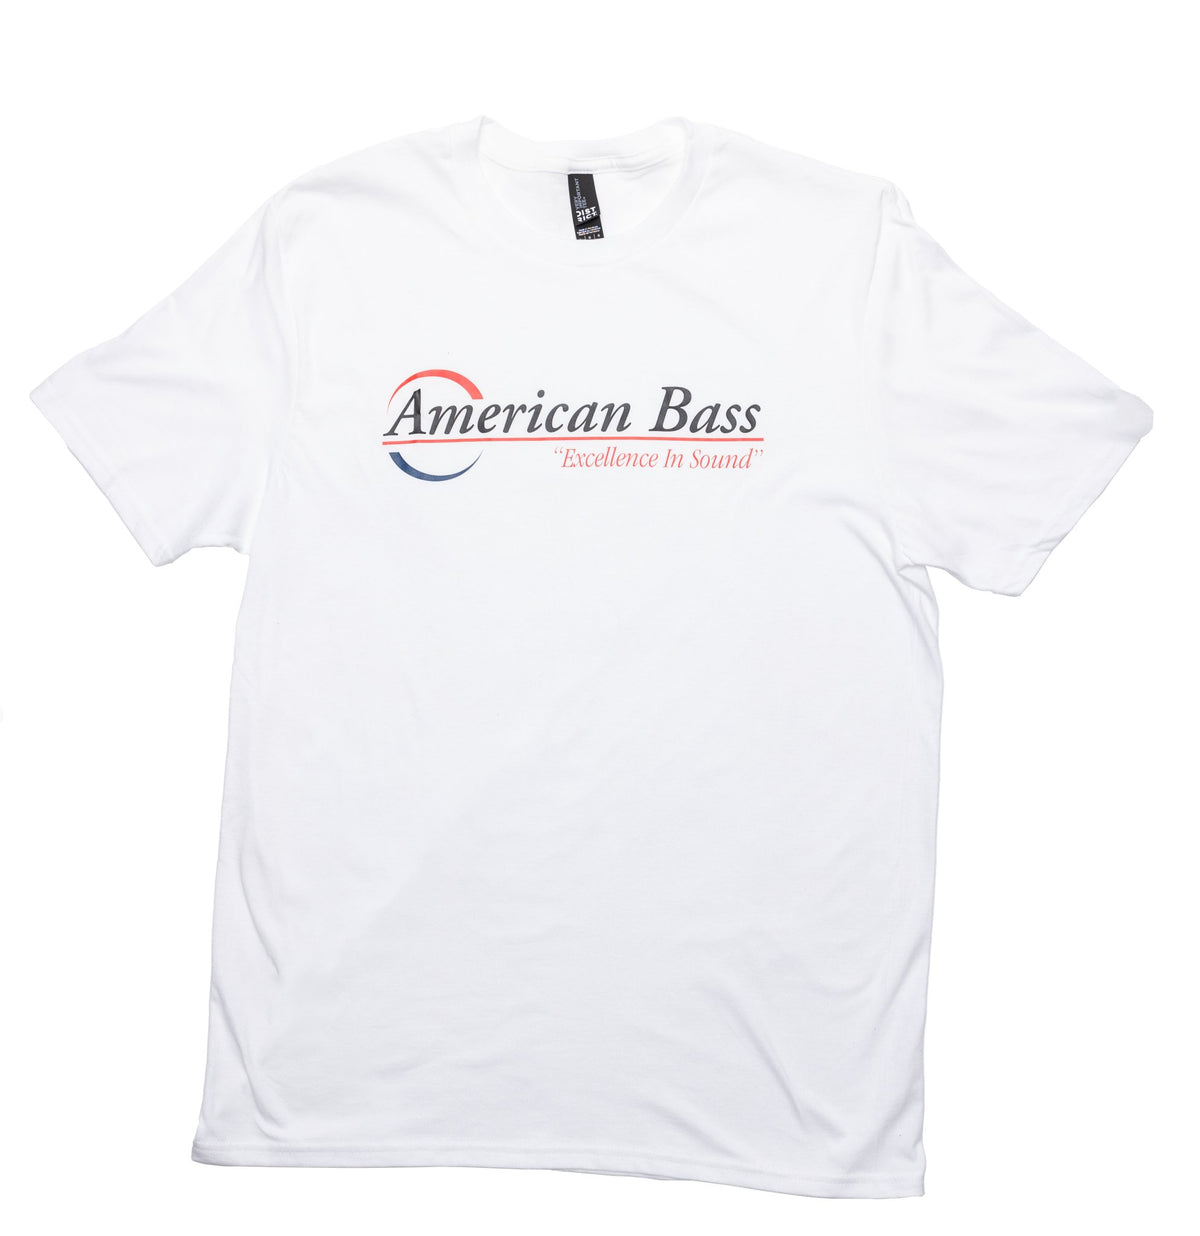 American Bass T-Shirt (White) Small